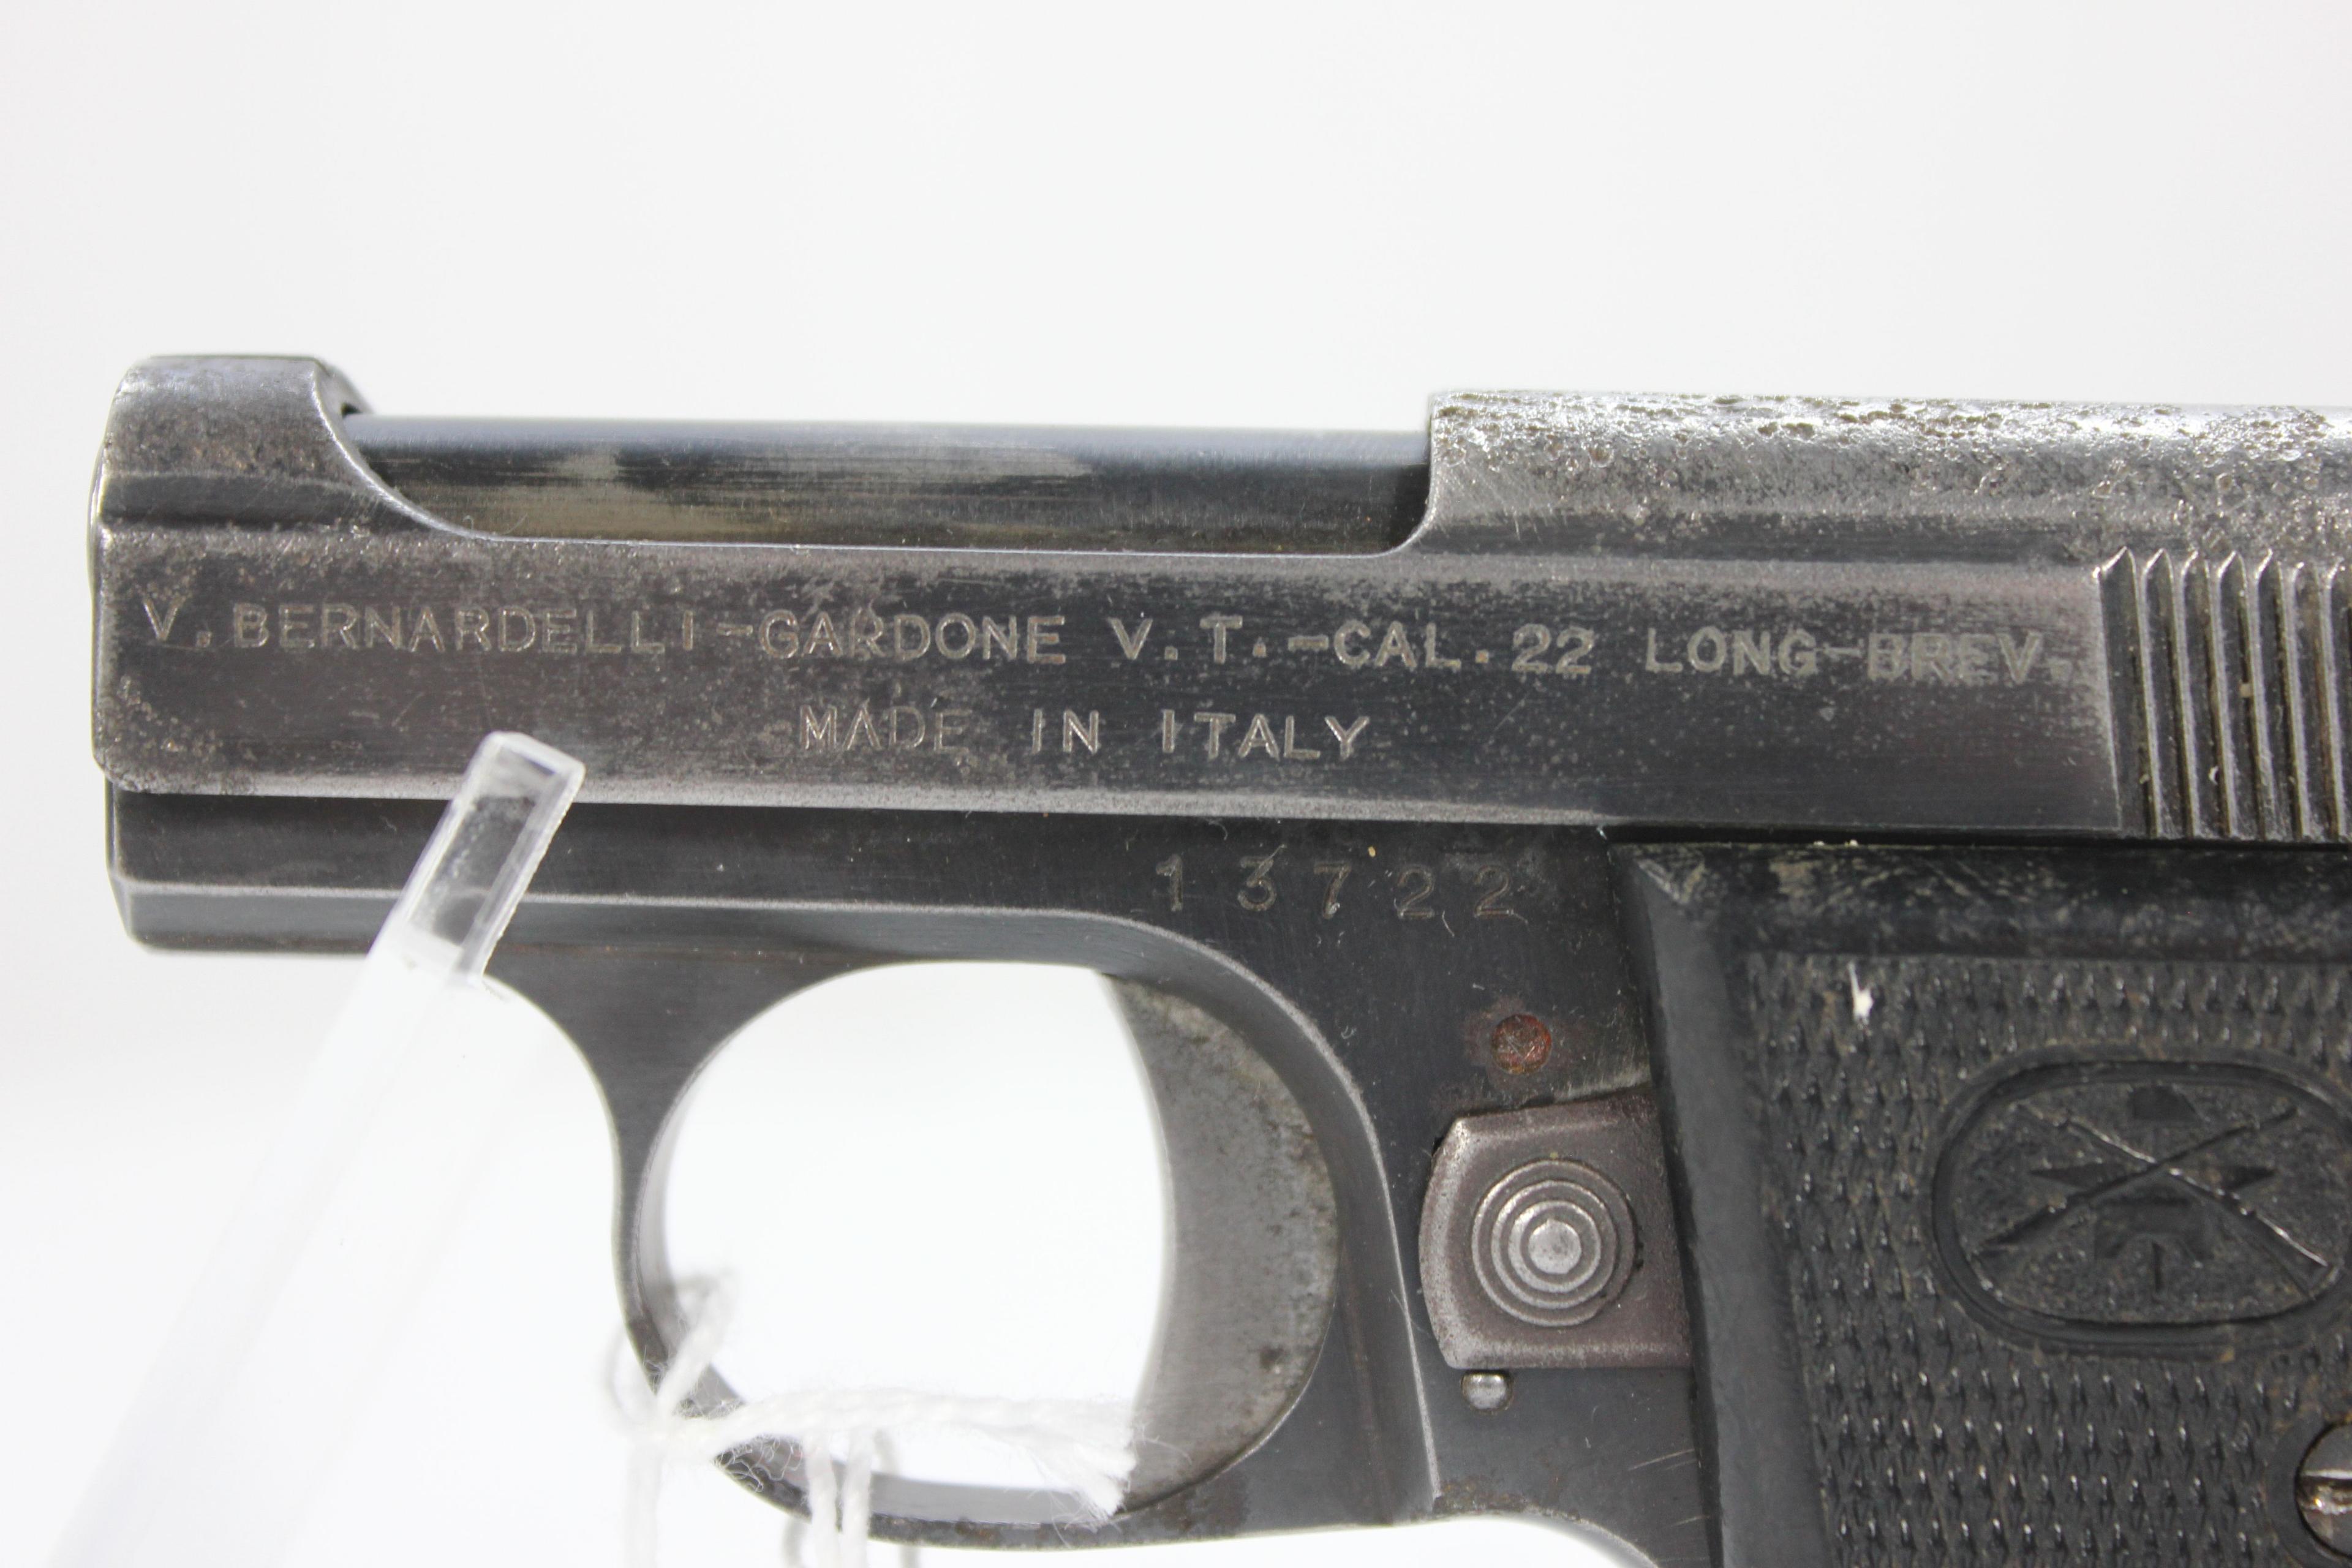 Bernardelli-Gardone .22LR Semi-Automatic Pistol; Made in Italy; SN 13722